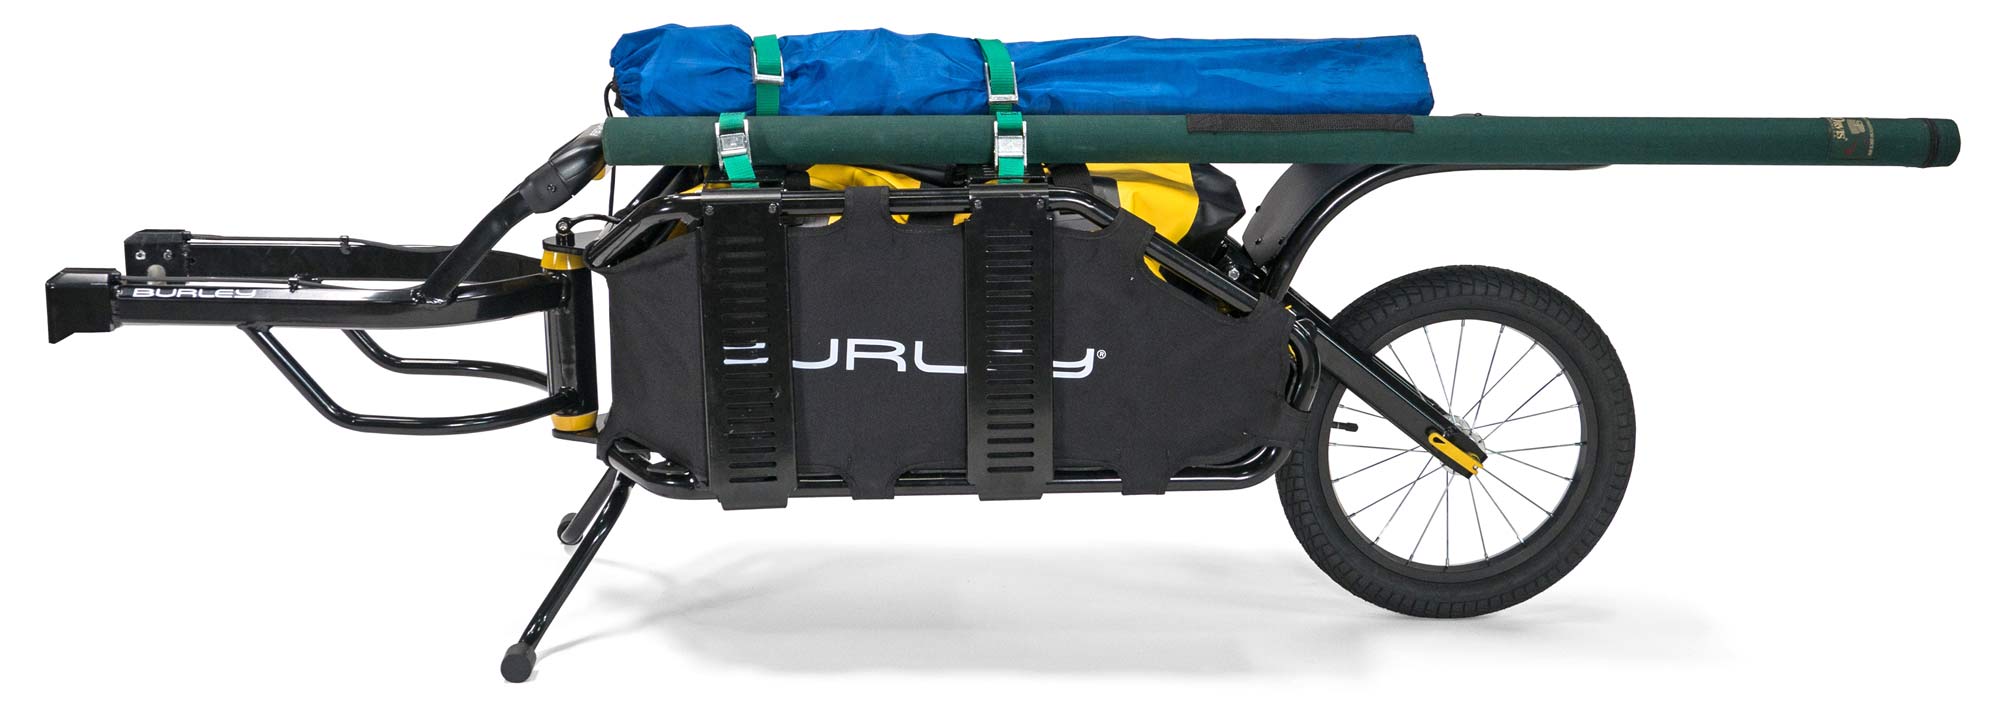 Burley Coho XC, an adventure-ready off-road bike trailer